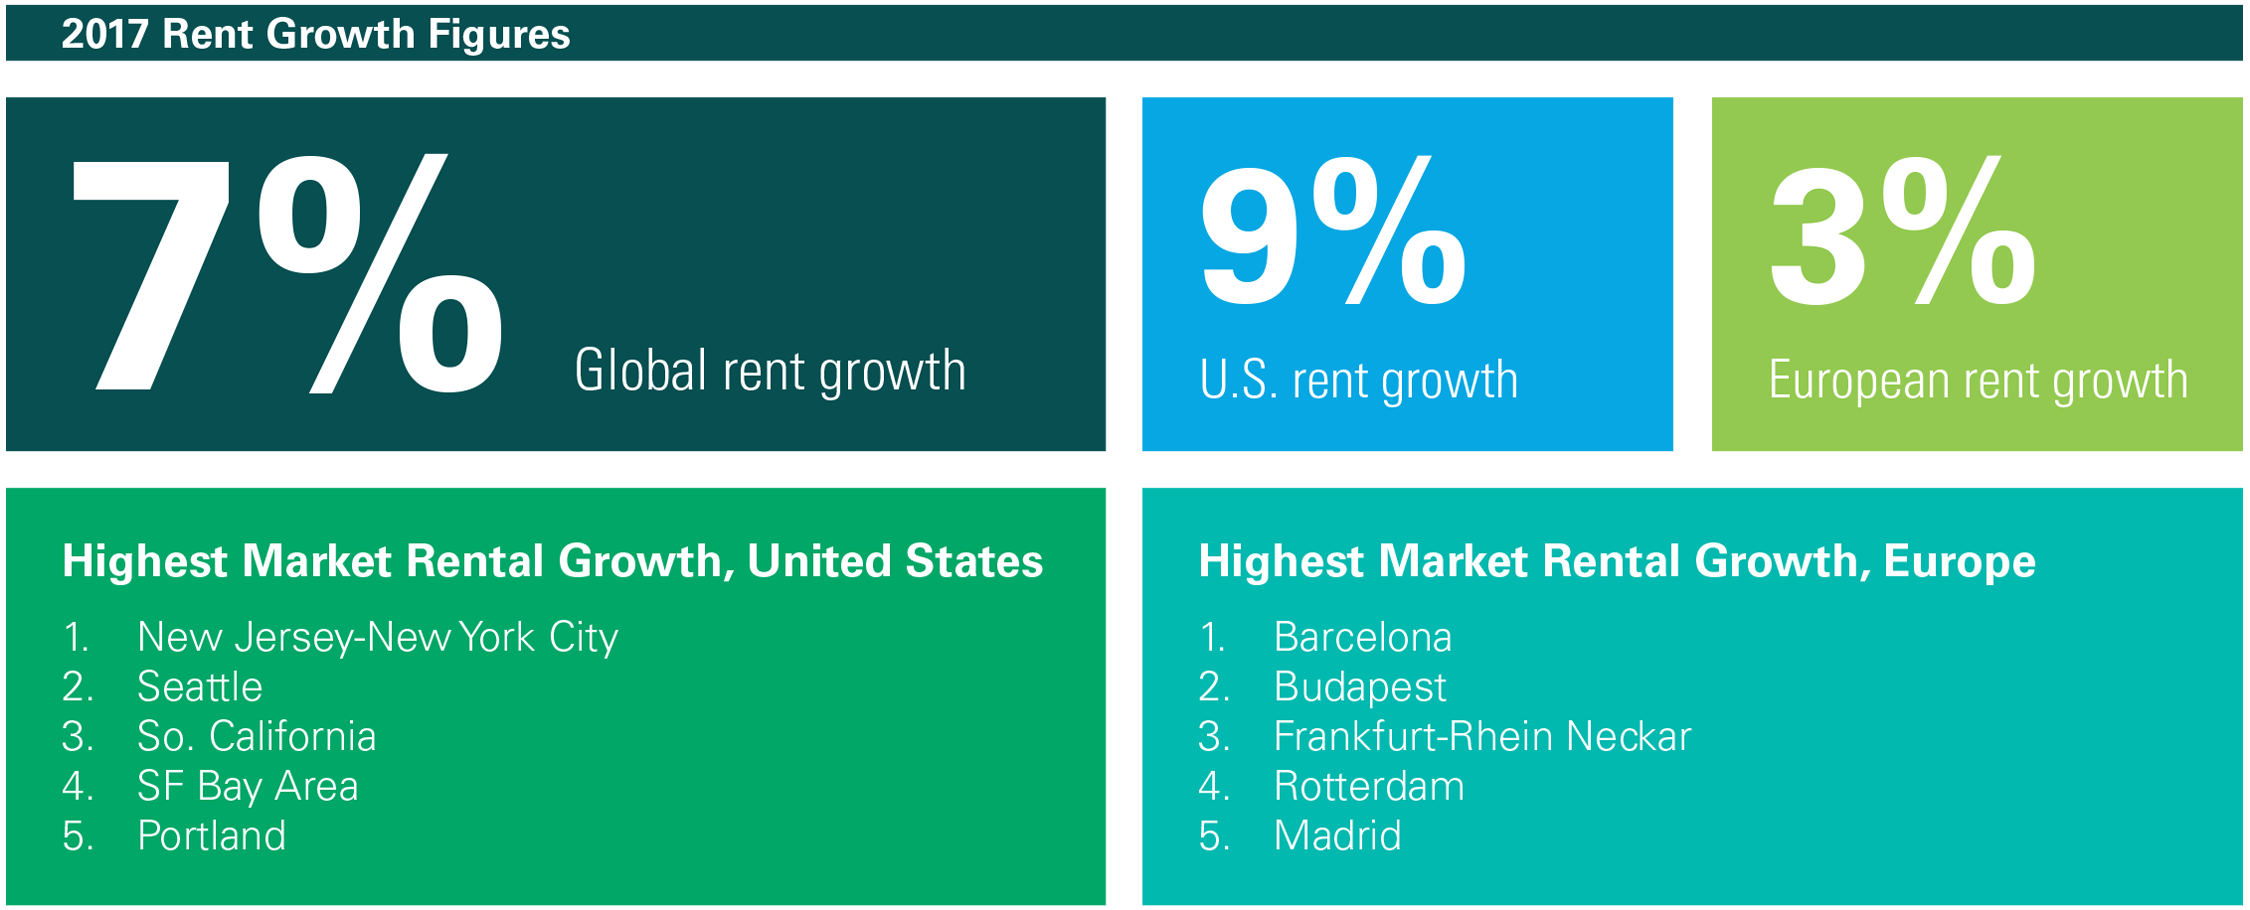 2017 Rent Growth Figures